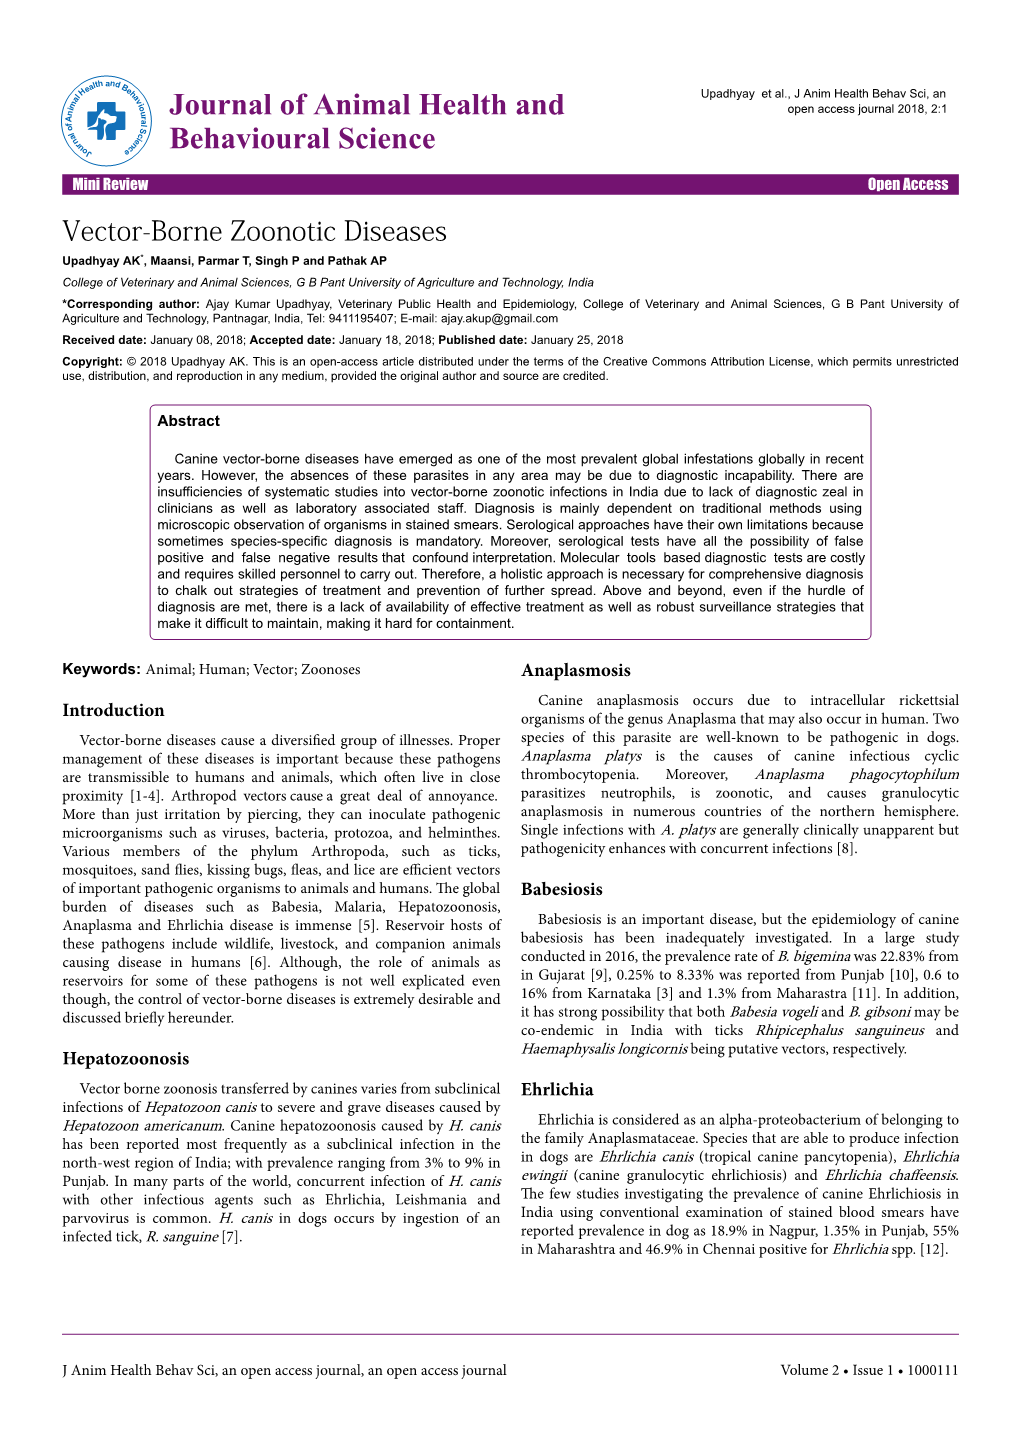 Vector-Borne Zoonotic Diseases